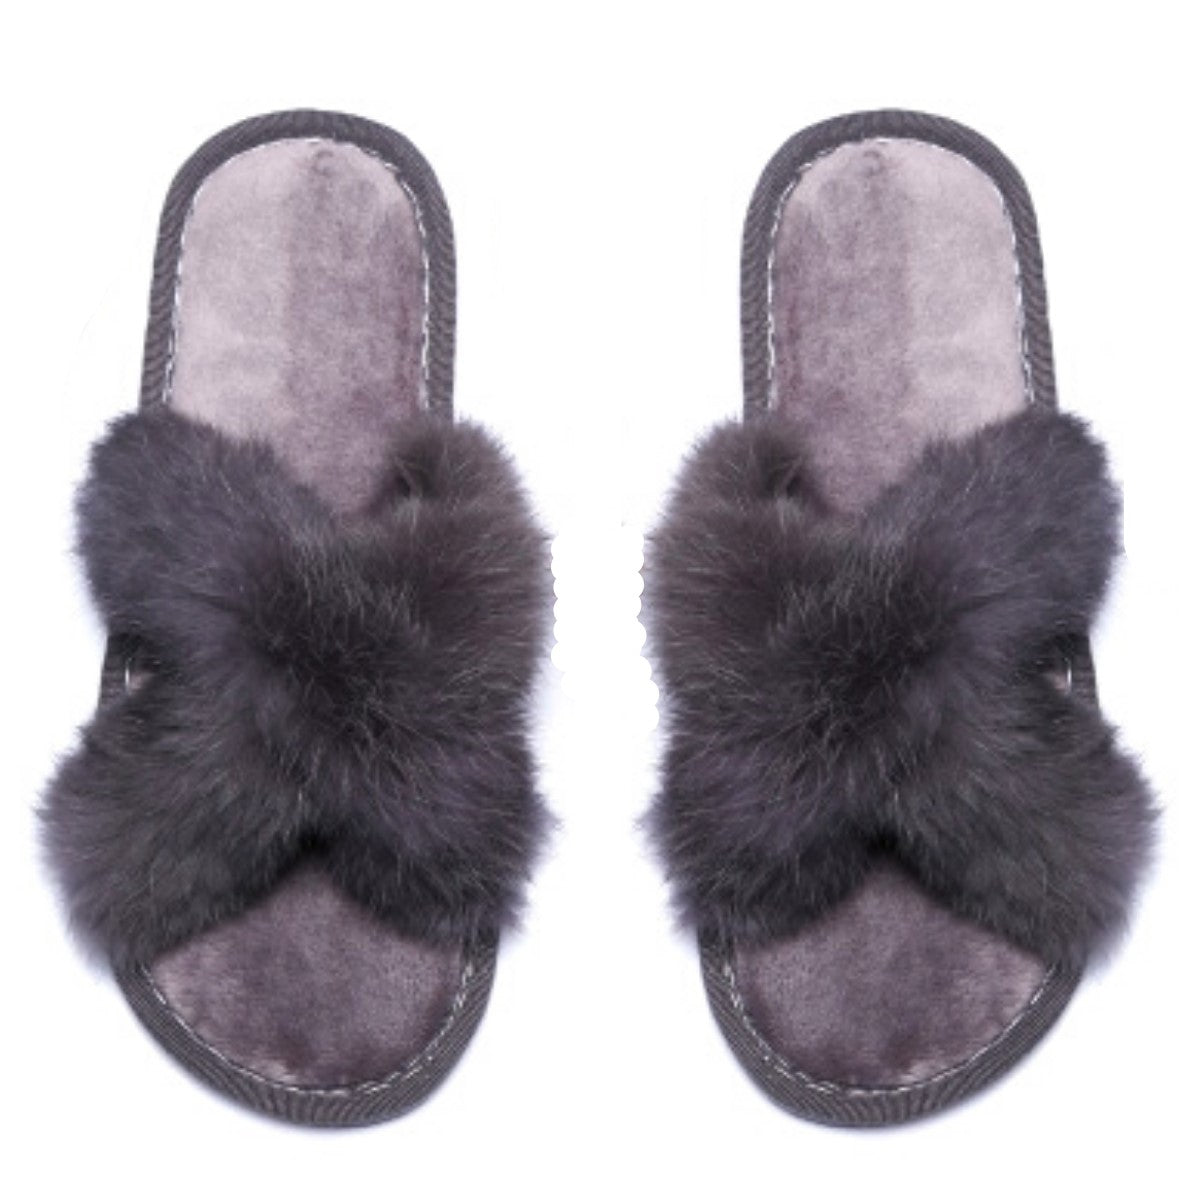 Size Medium Gray Fur Slippers